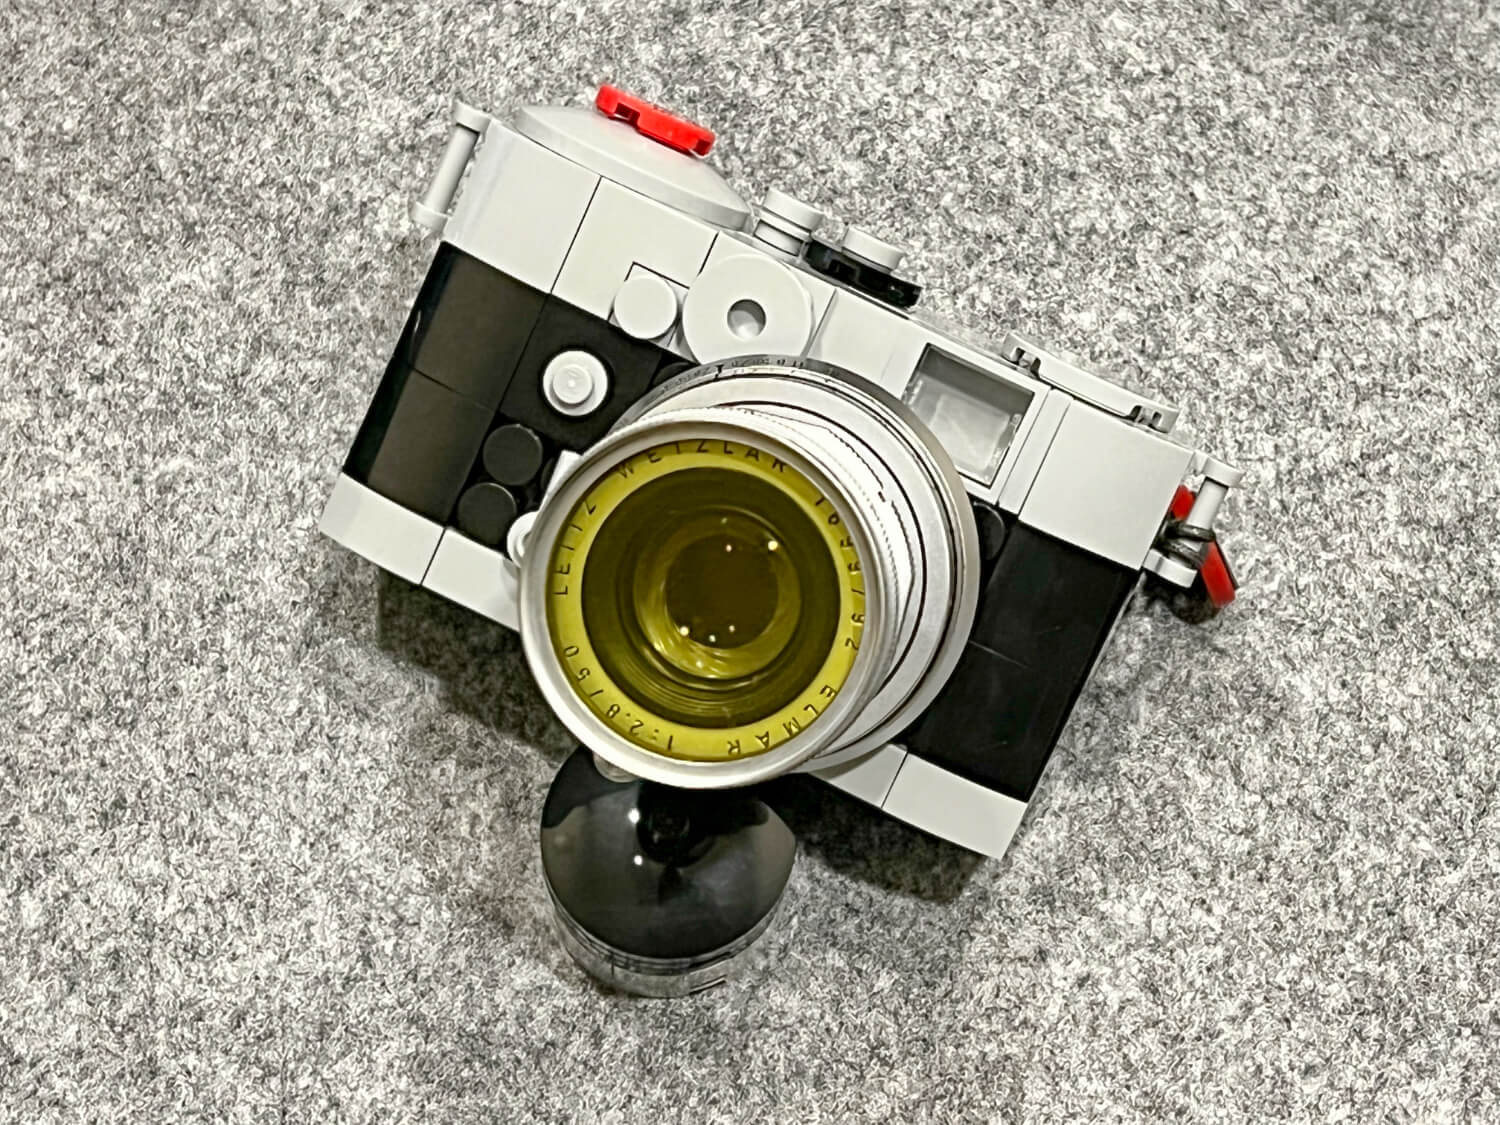 Lego 6392344 VIP Rangefinder Camera modified for M-Mount lenses